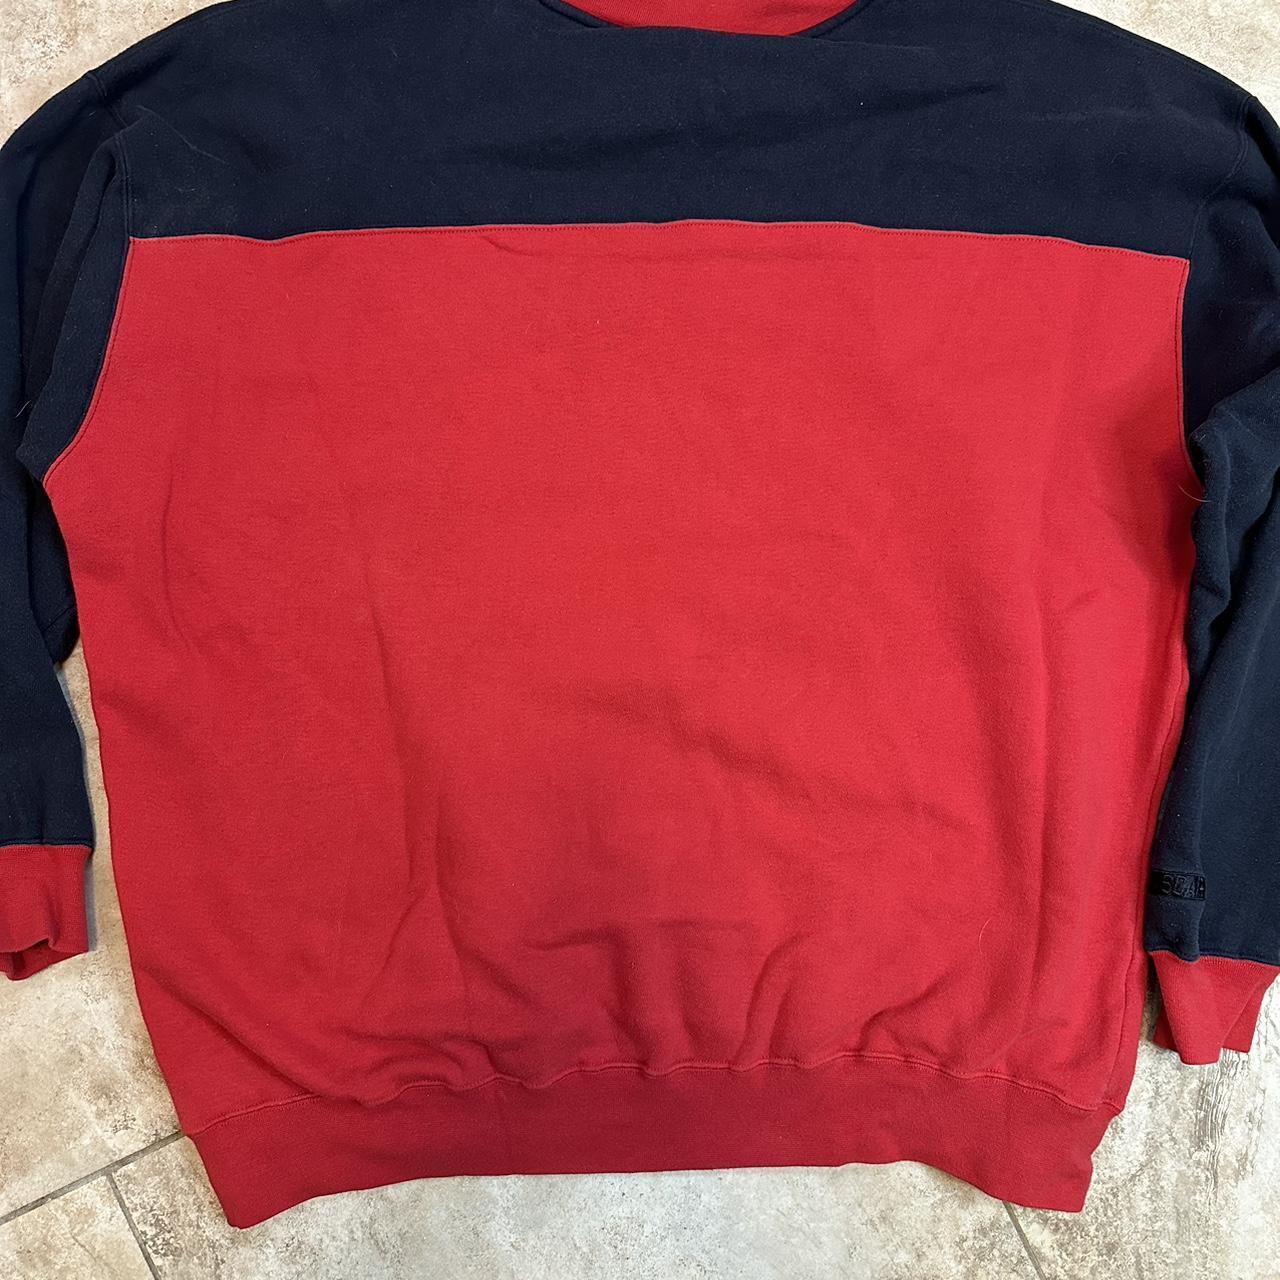 Chase Authentics Men's Red and Black Sweatshirt (6)